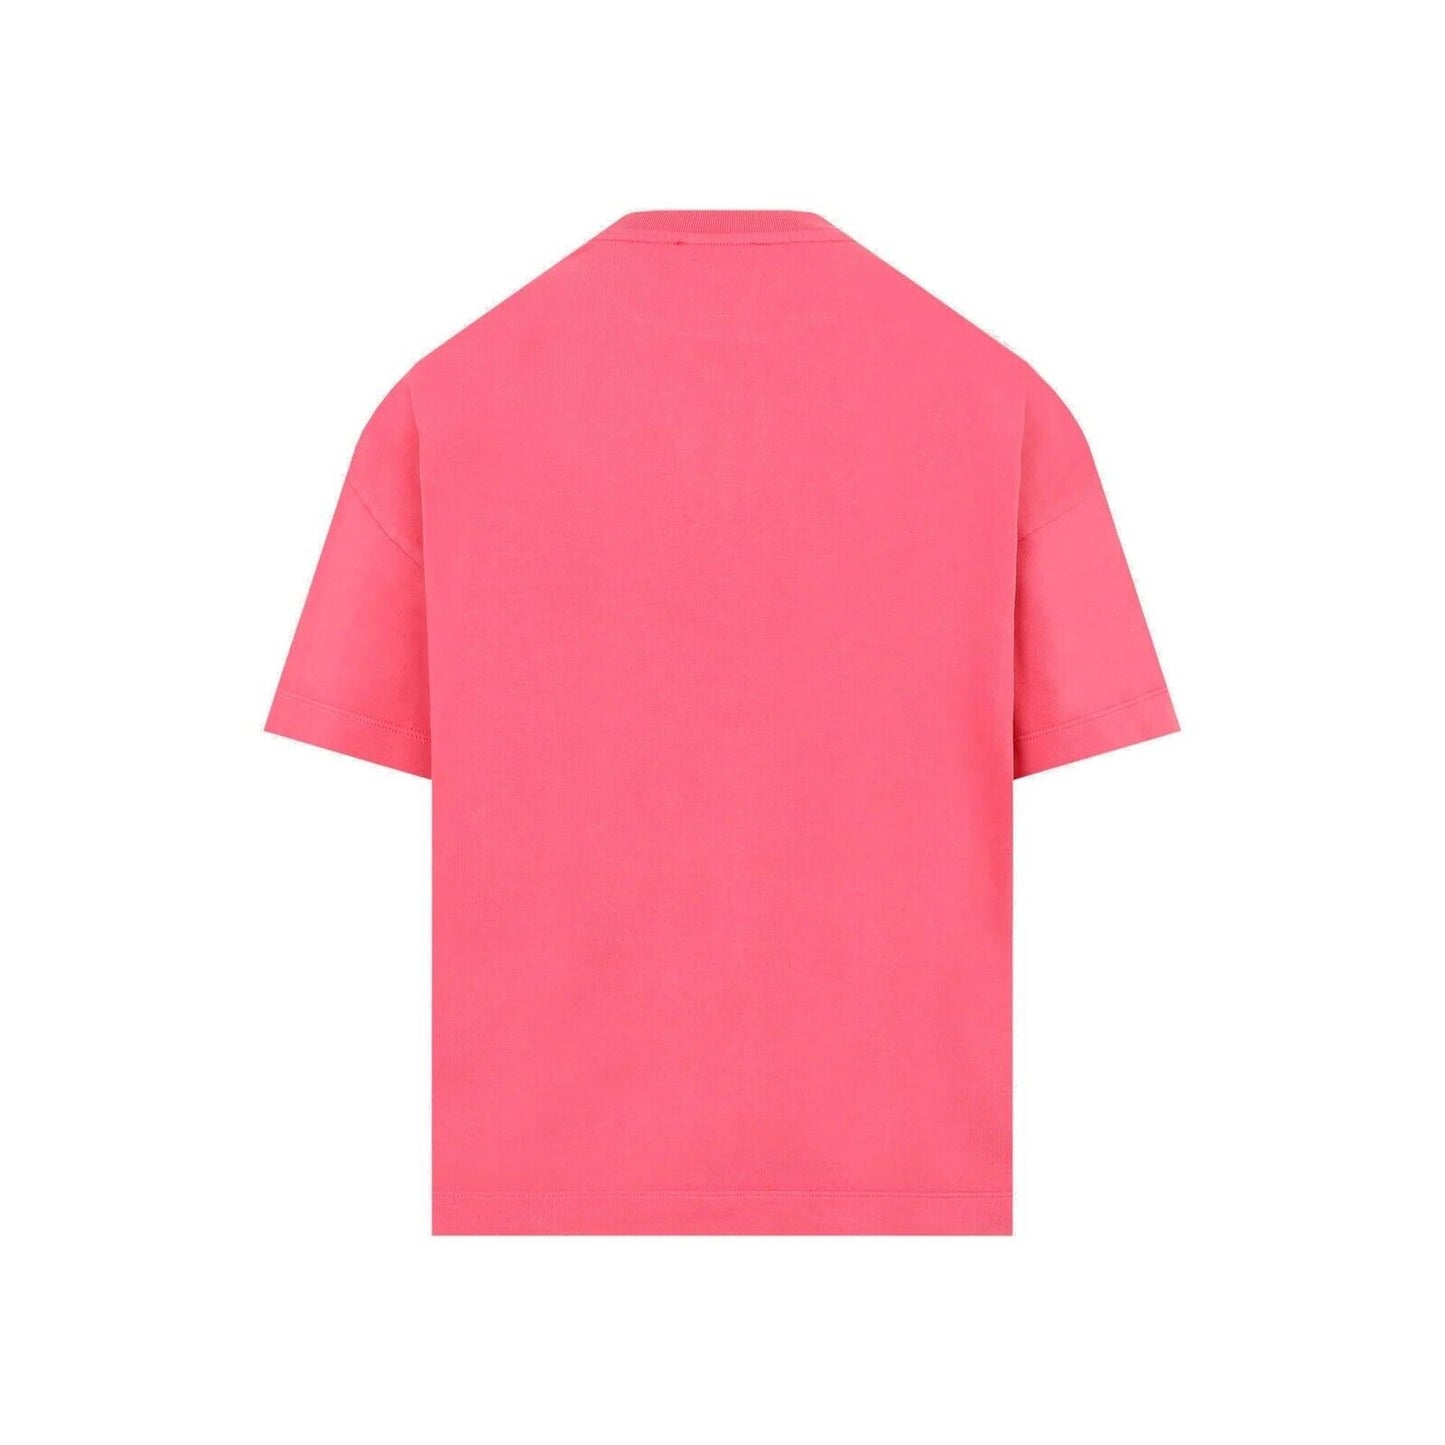 Kenzo Bandana Classic Sweat Shirt Pink Jumper Tee Short Sleeved